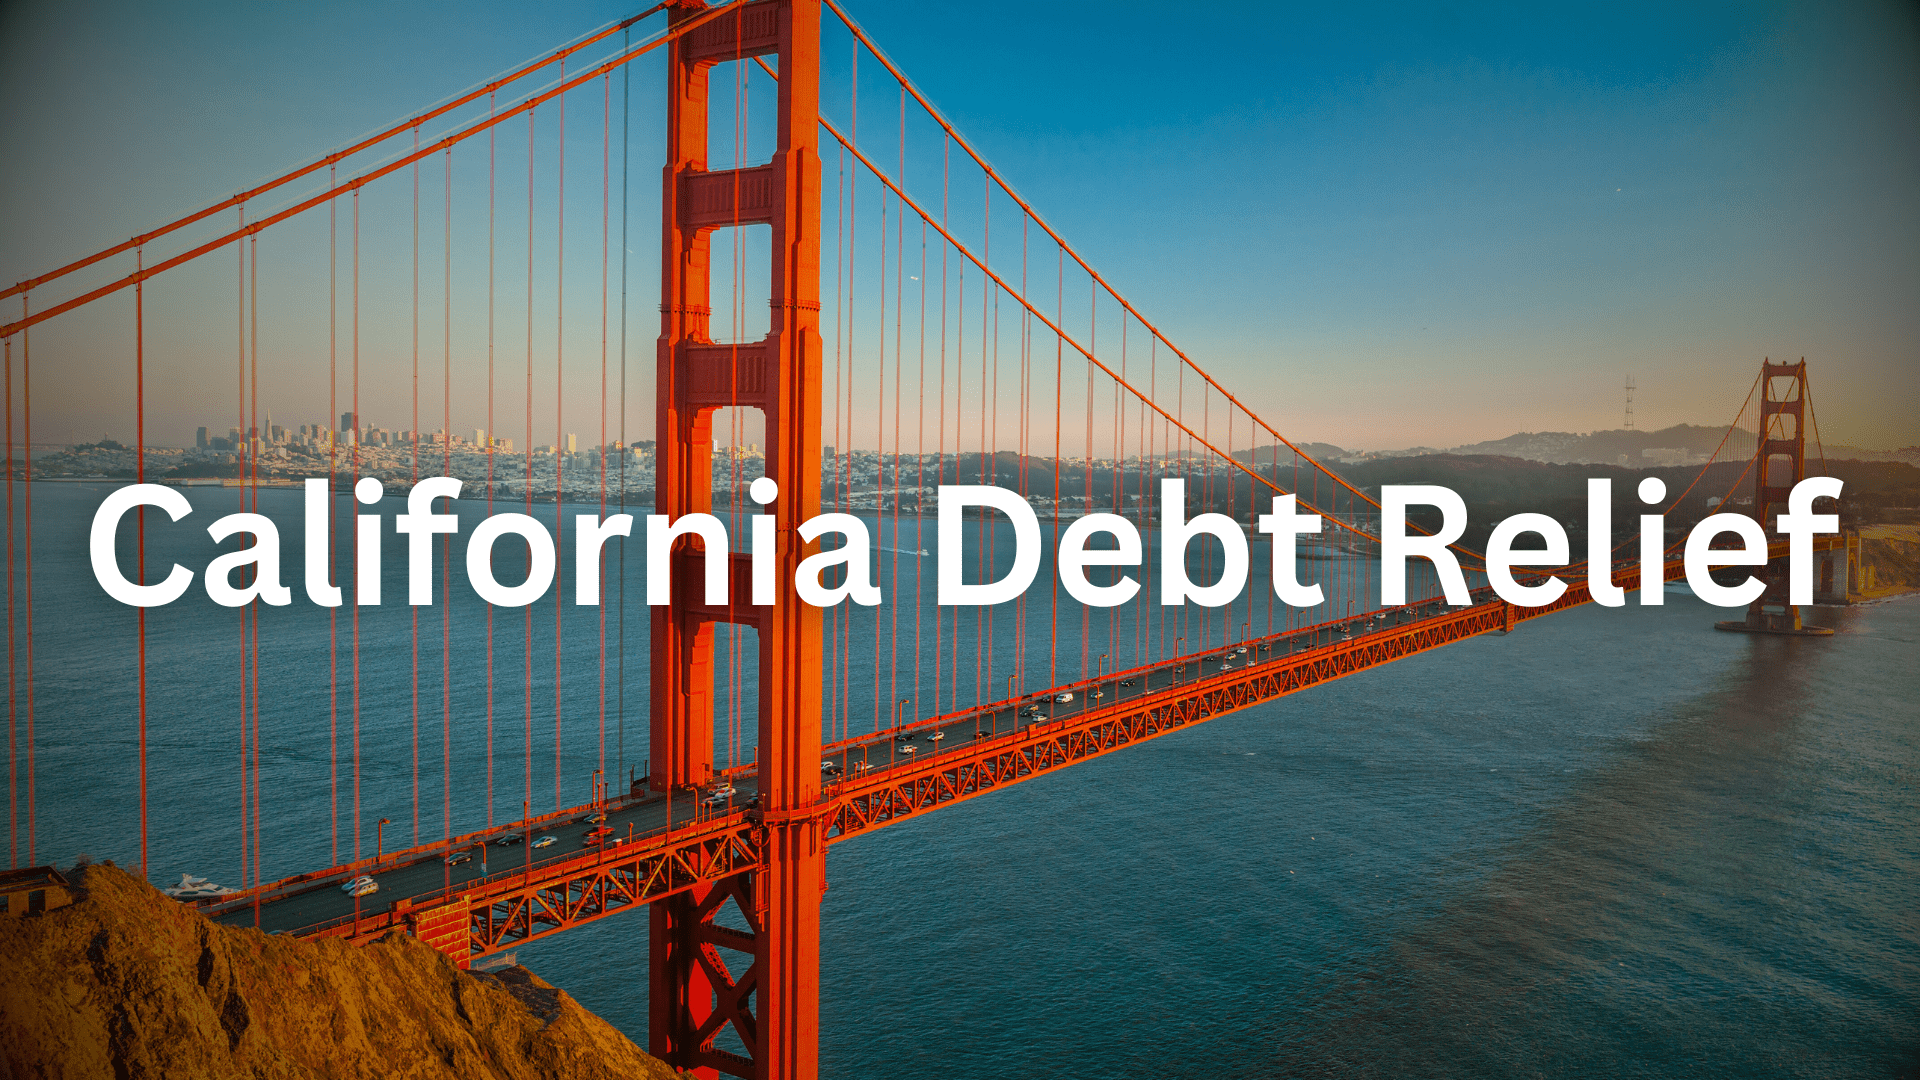 California Debt Relief
